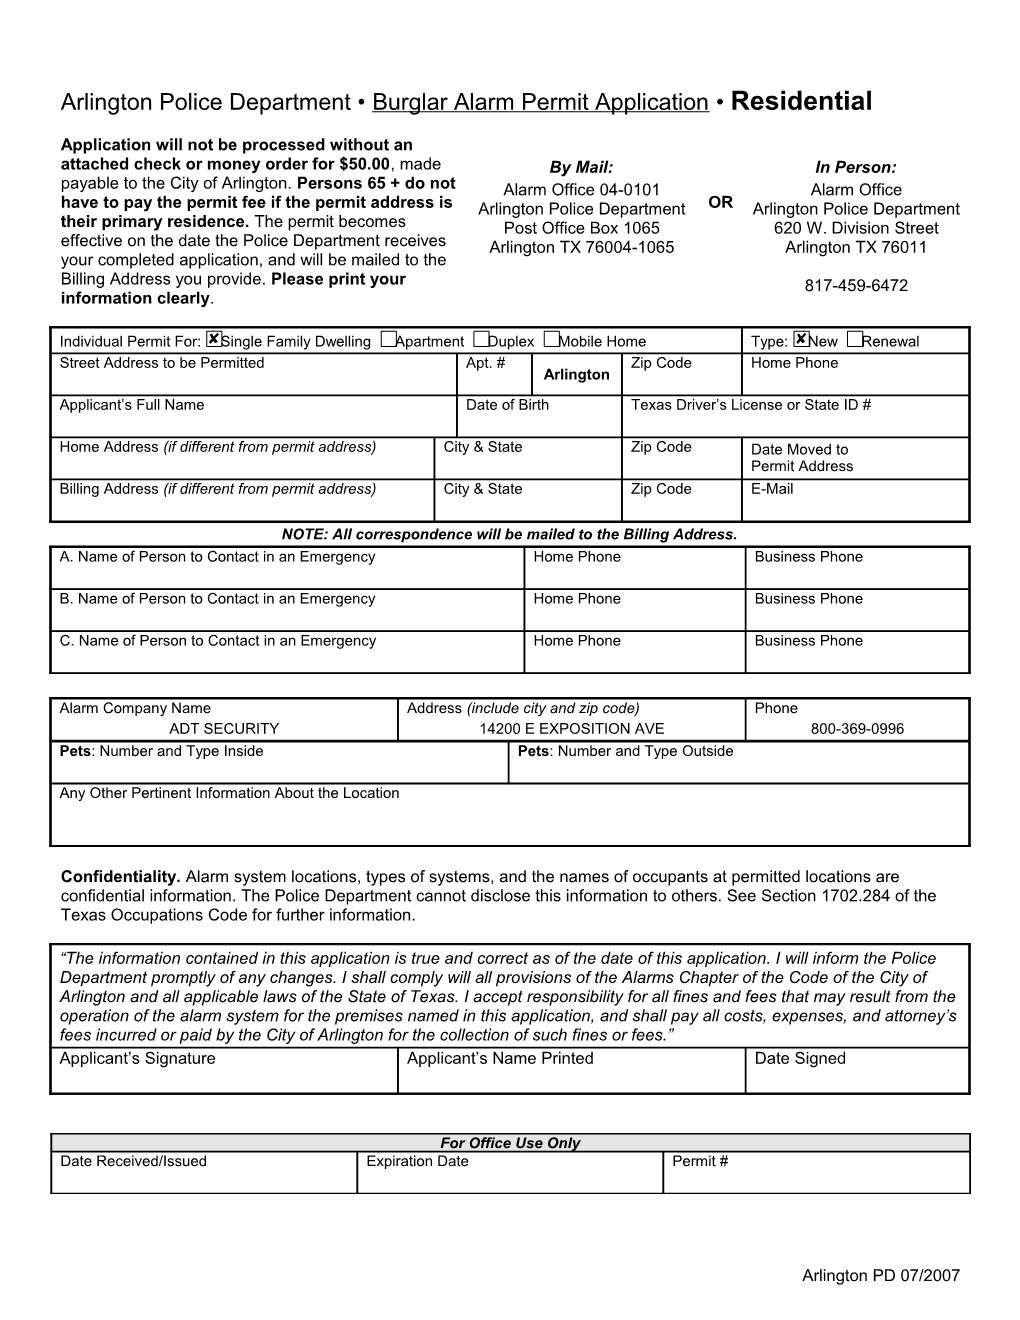 Arlington Police Department Burglar Alarm Permit Application: Residential